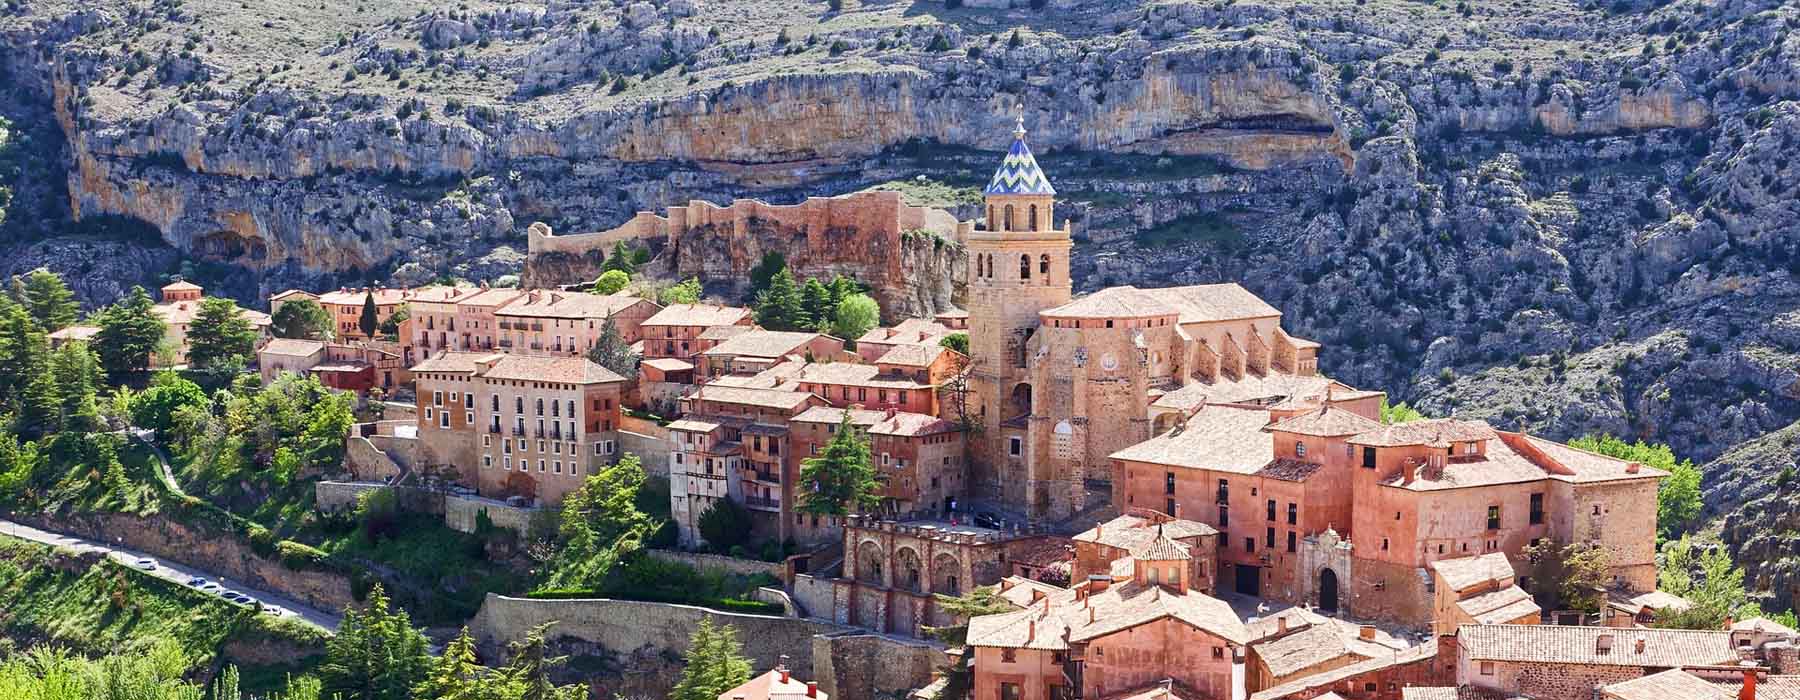 Hotel Albarracín  header